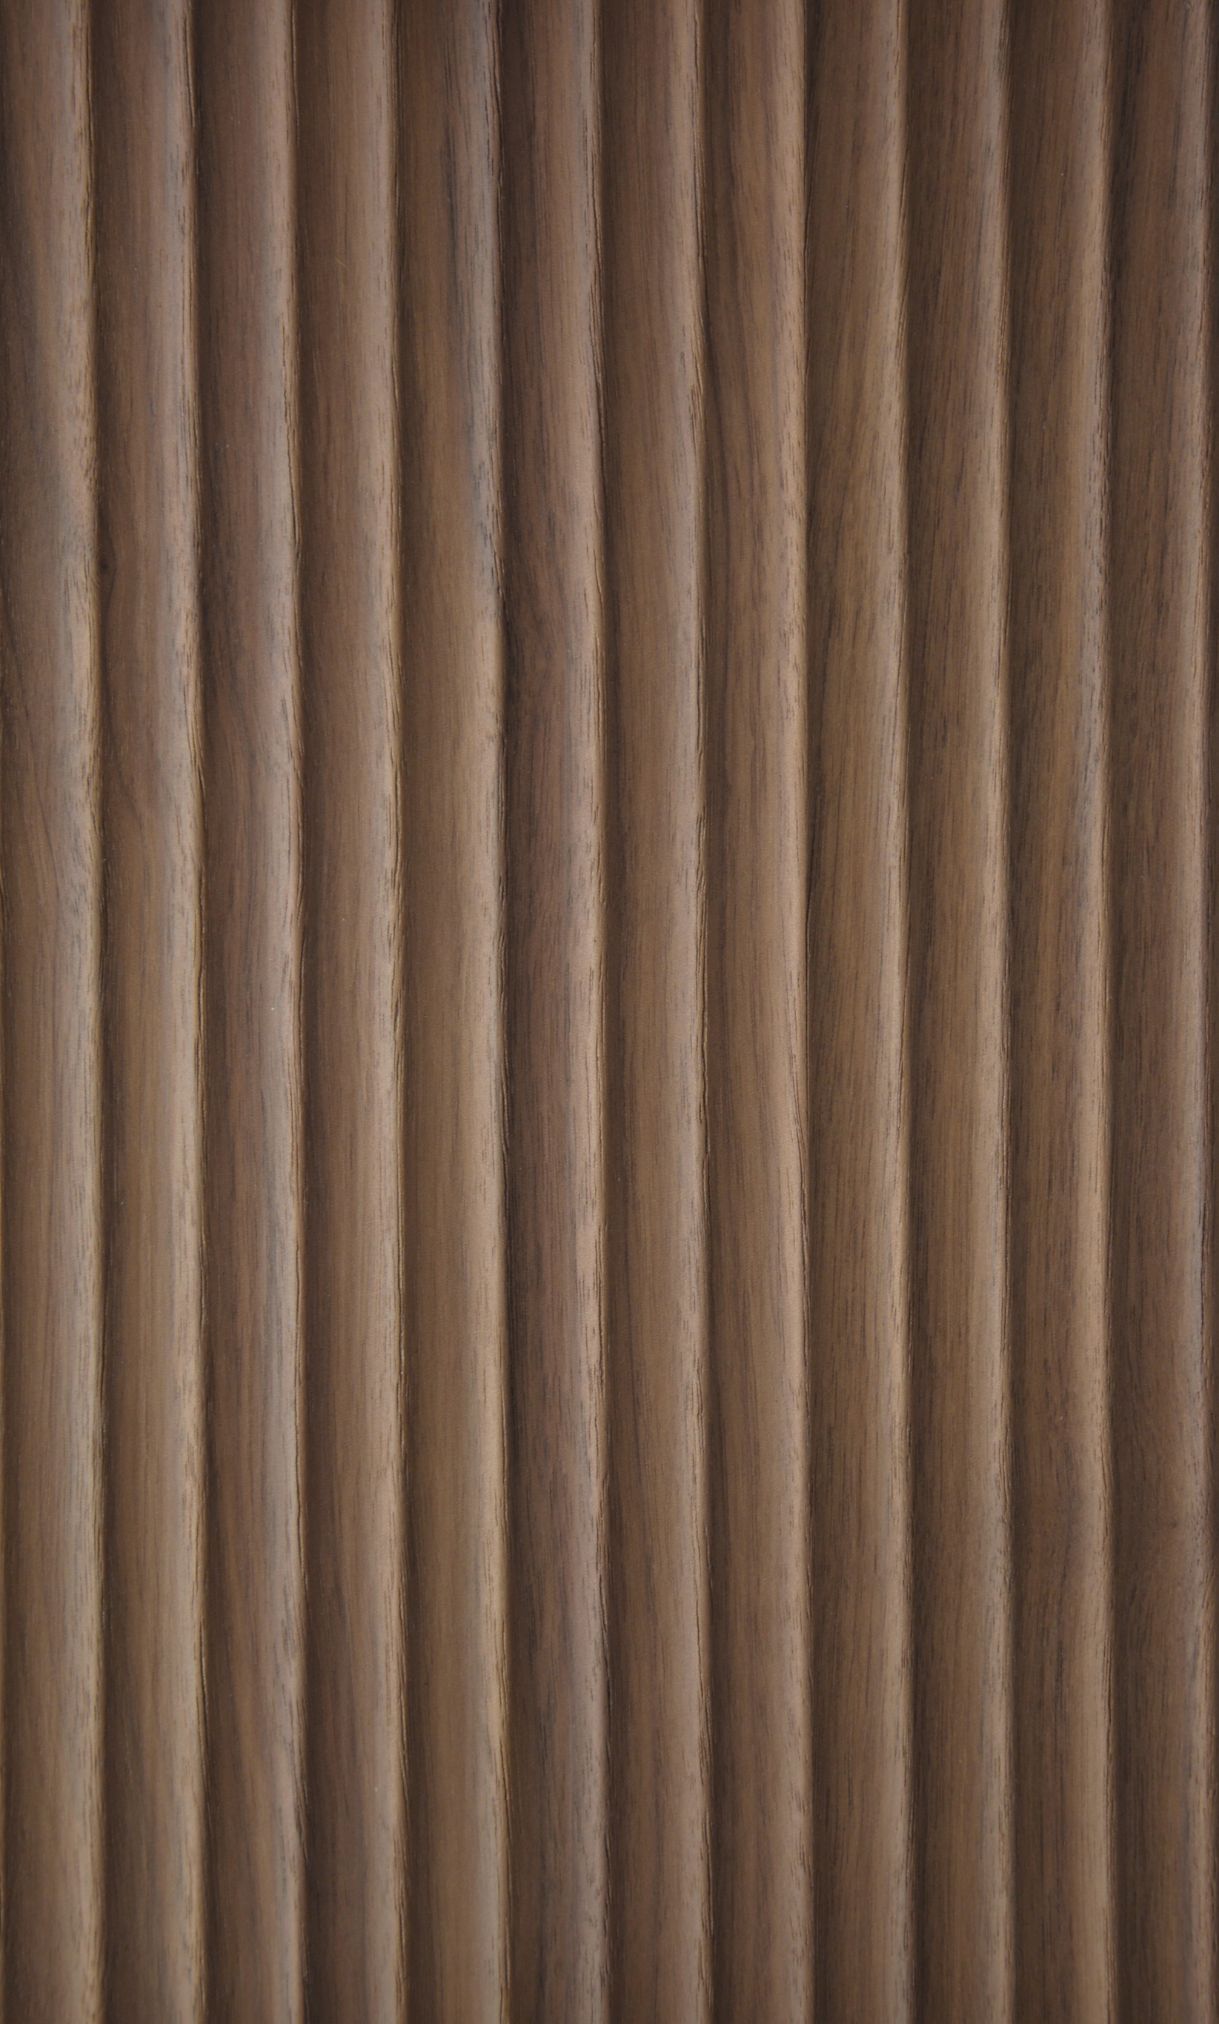 2636 - Cave - Heartwood walnut - Real wood veneer